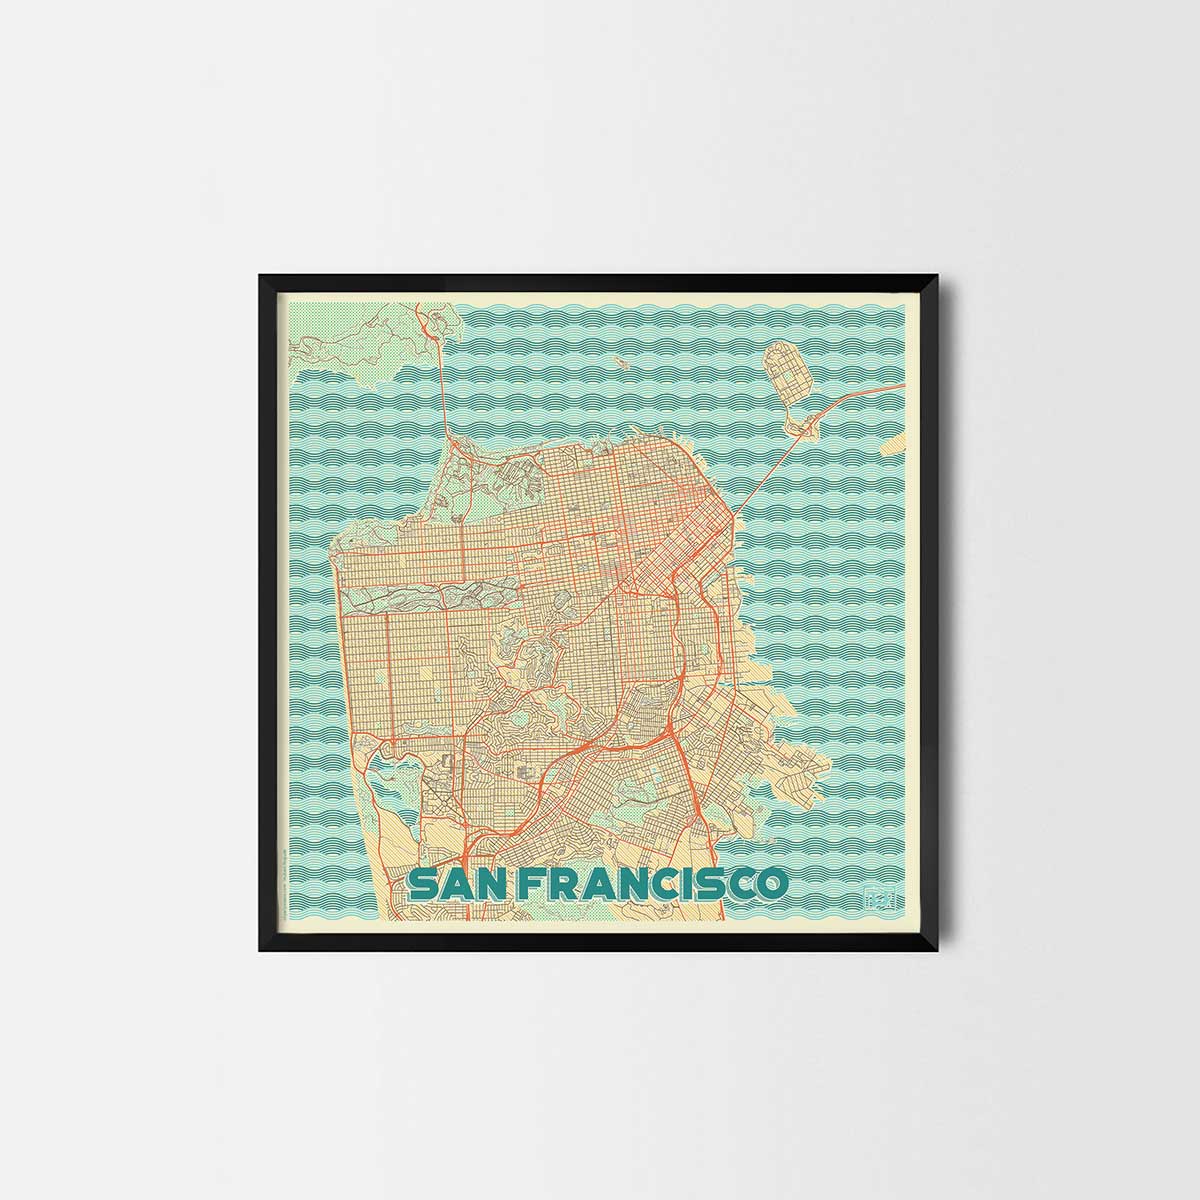 San Francisco City Prints city map art posters retro map posters city map prints city posters retro posters